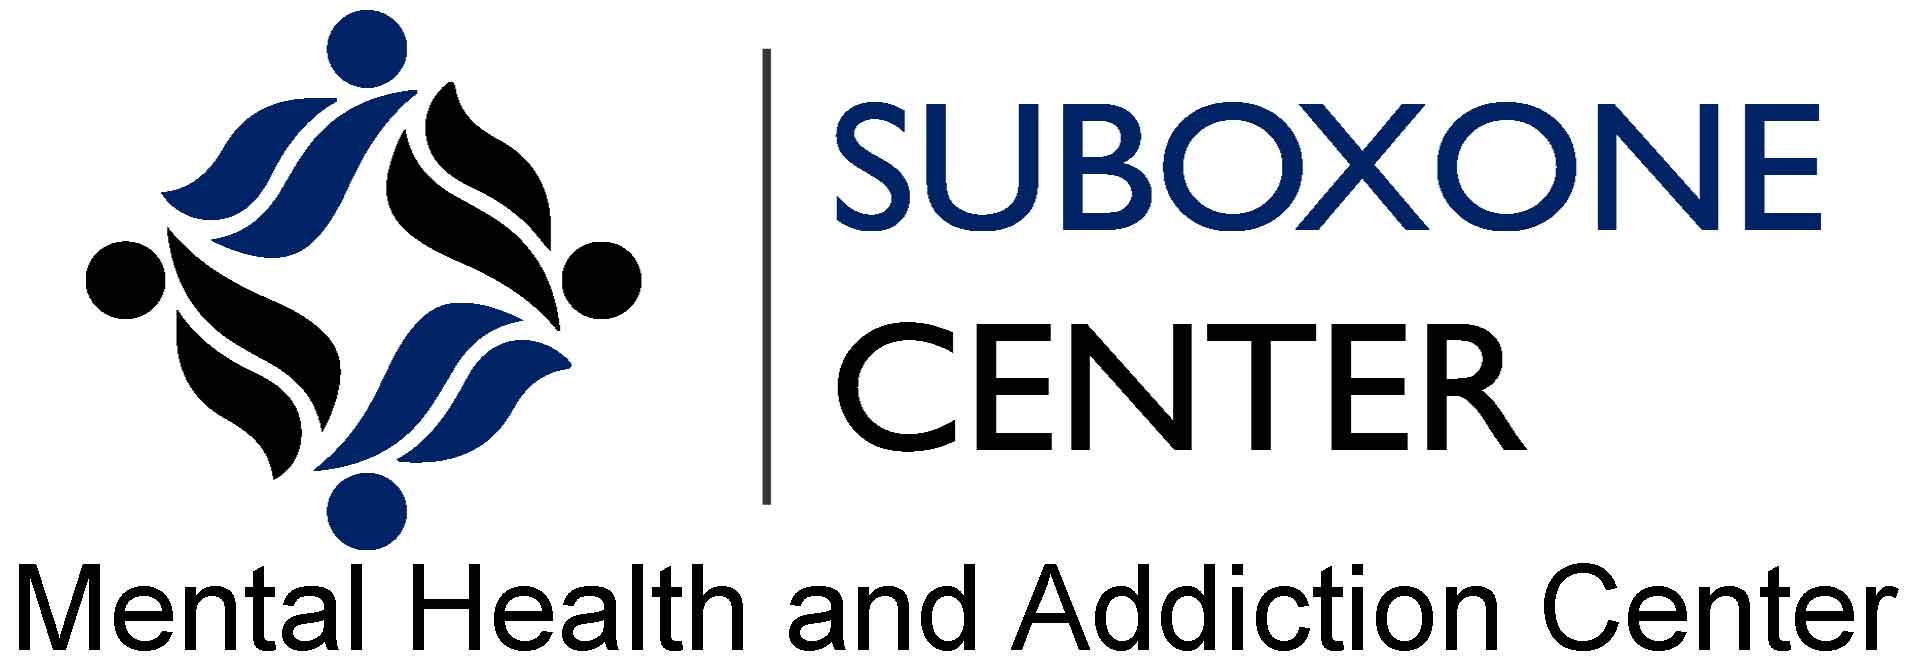 Mental health & addiction center - Jersey City, NJ - Mental Health & Addiction Center